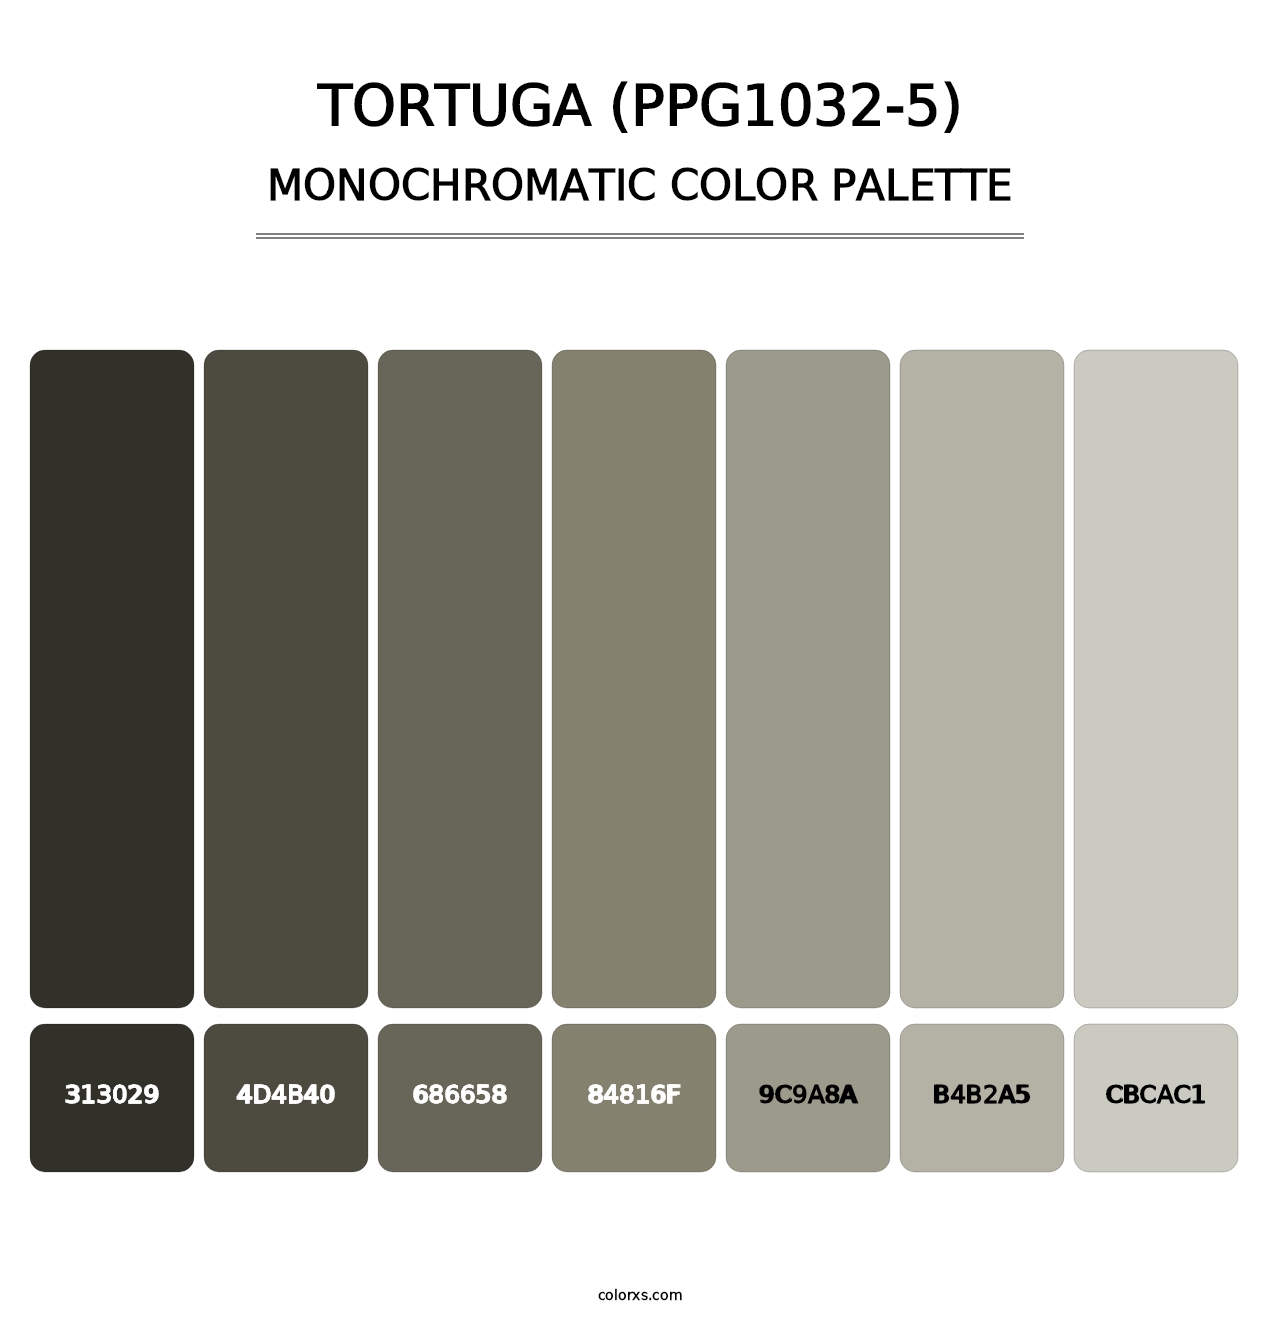 Tortuga (PPG1032-5) - Monochromatic Color Palette